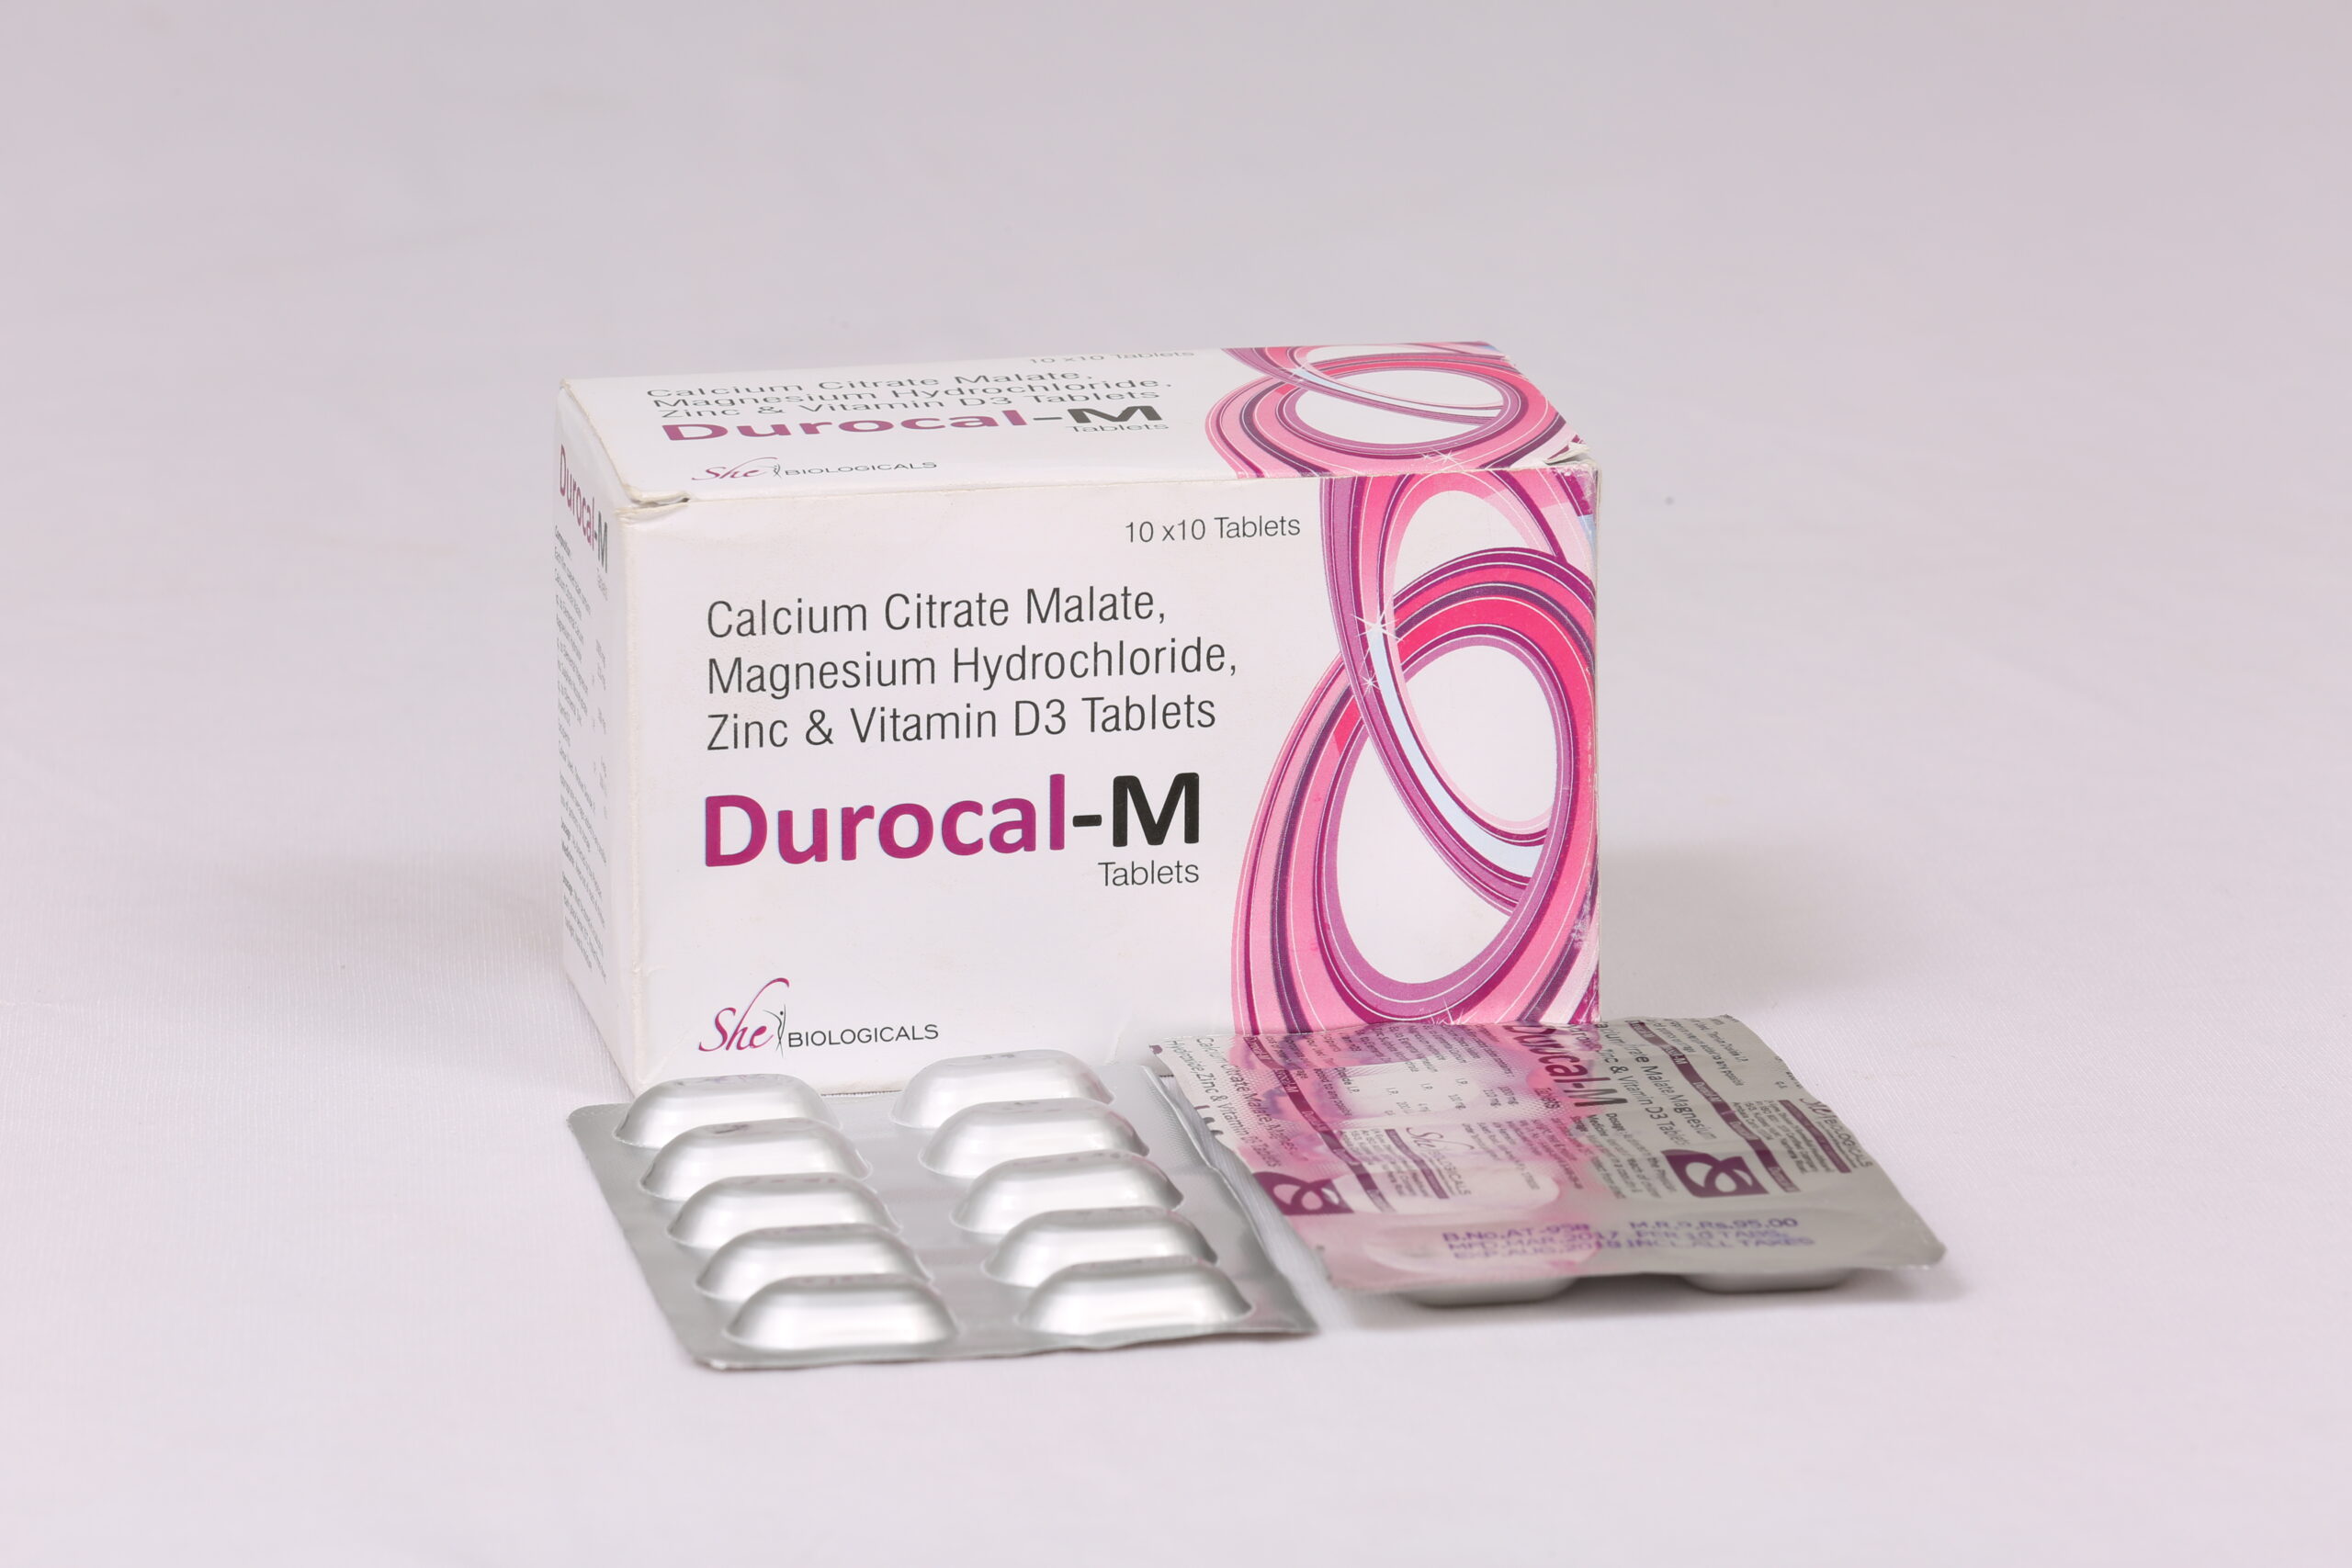 DUROCAL-M (Calcium Citrate Maleate Magnesium Hydroxide Zinc)